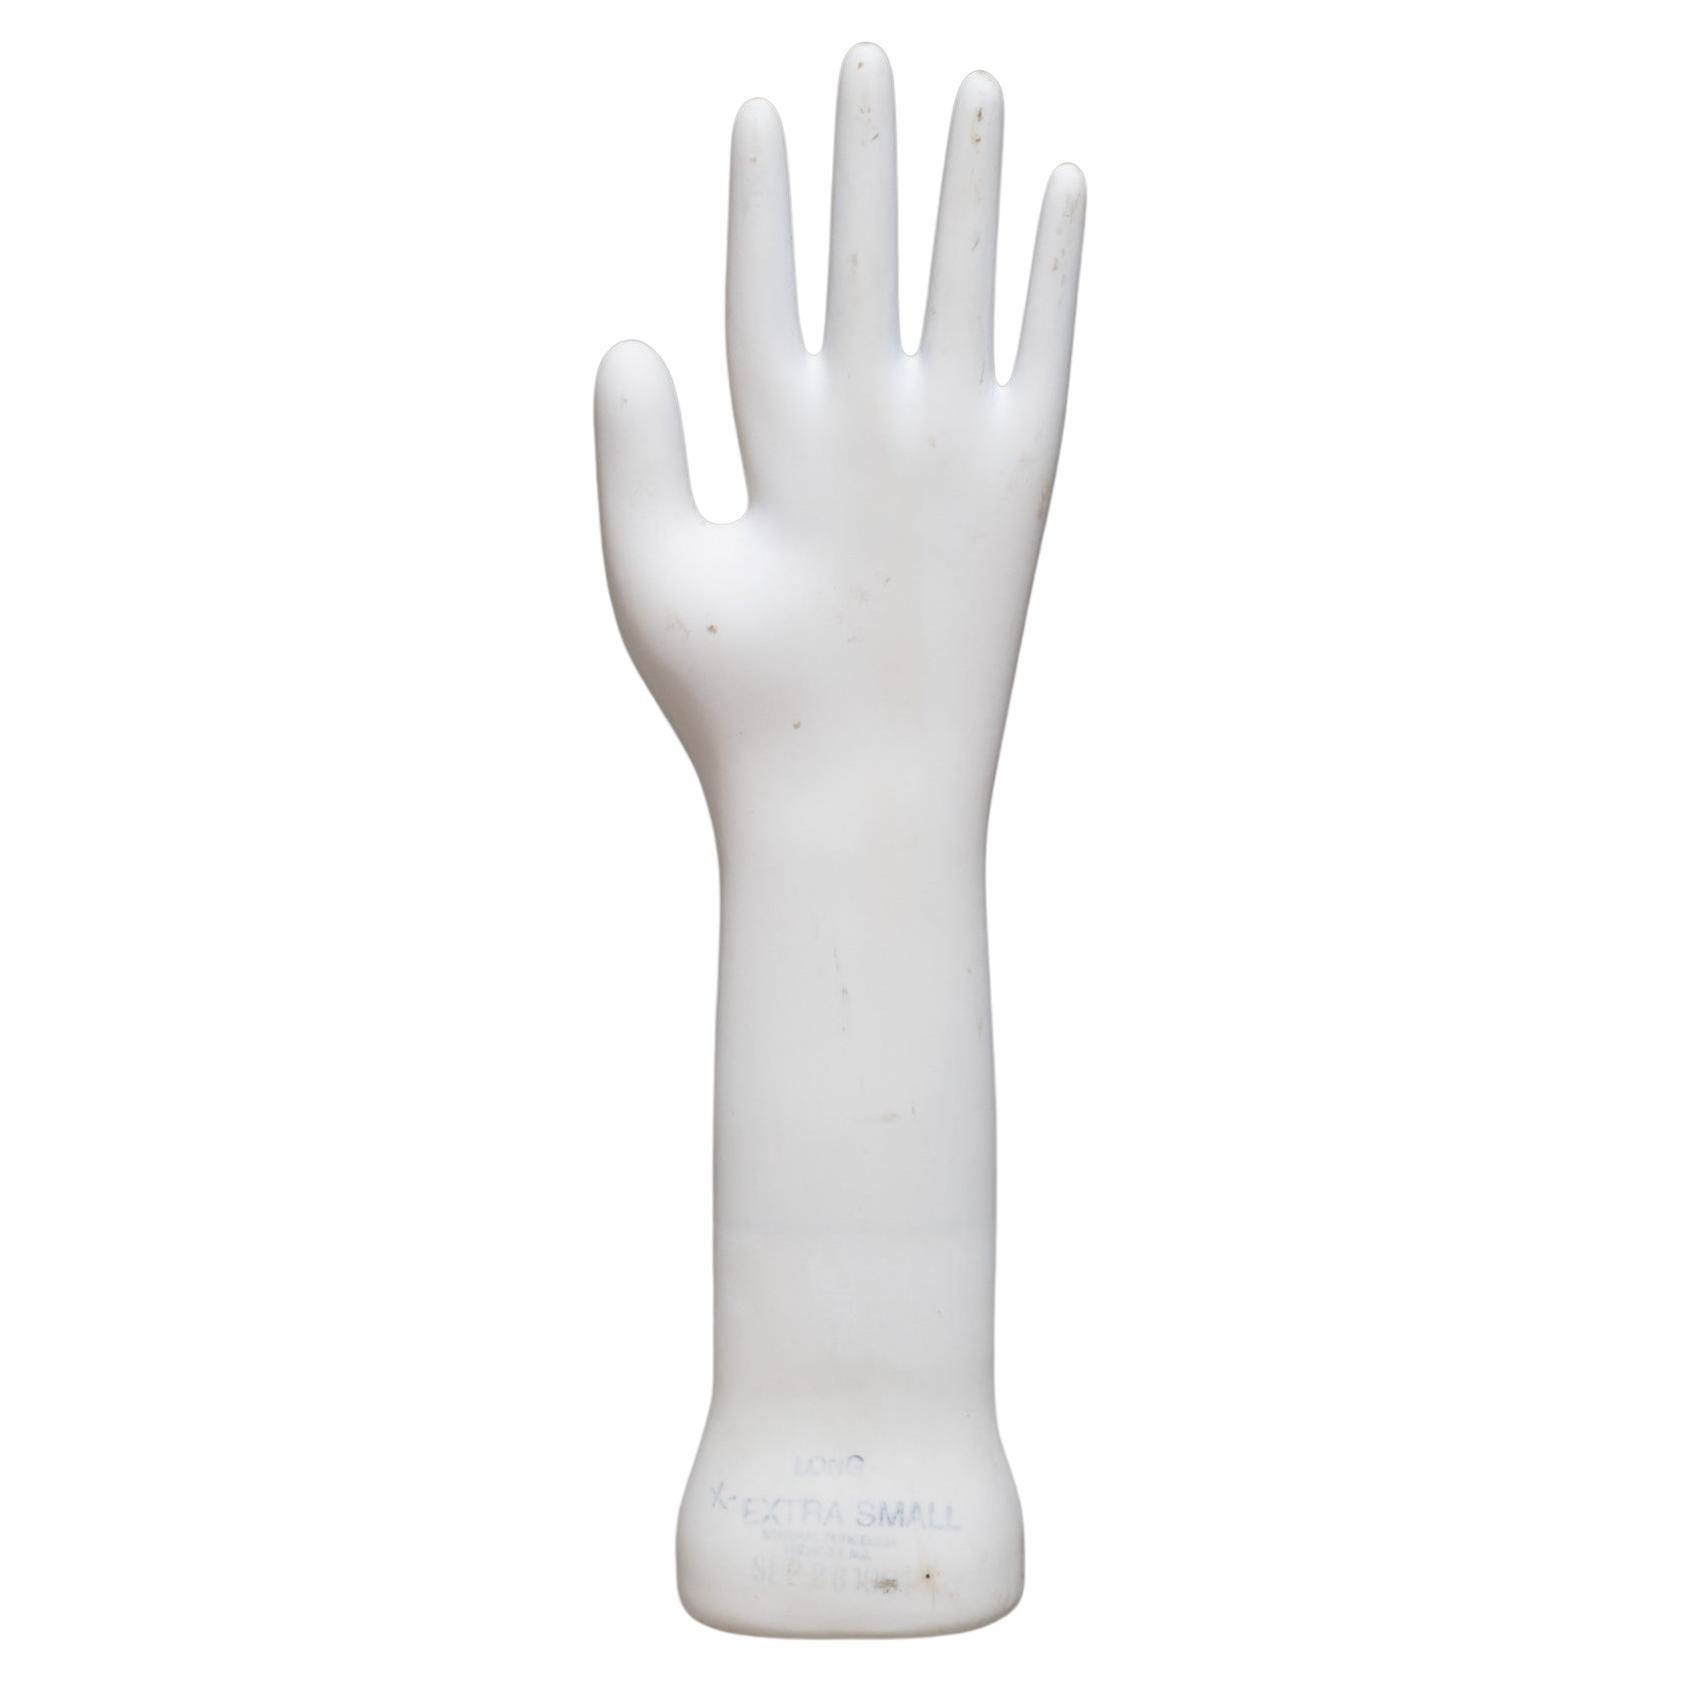 Vintage Glazed Porcelain Factory Rubber Glove Molds, C.1991  (FREE SHIPPING)